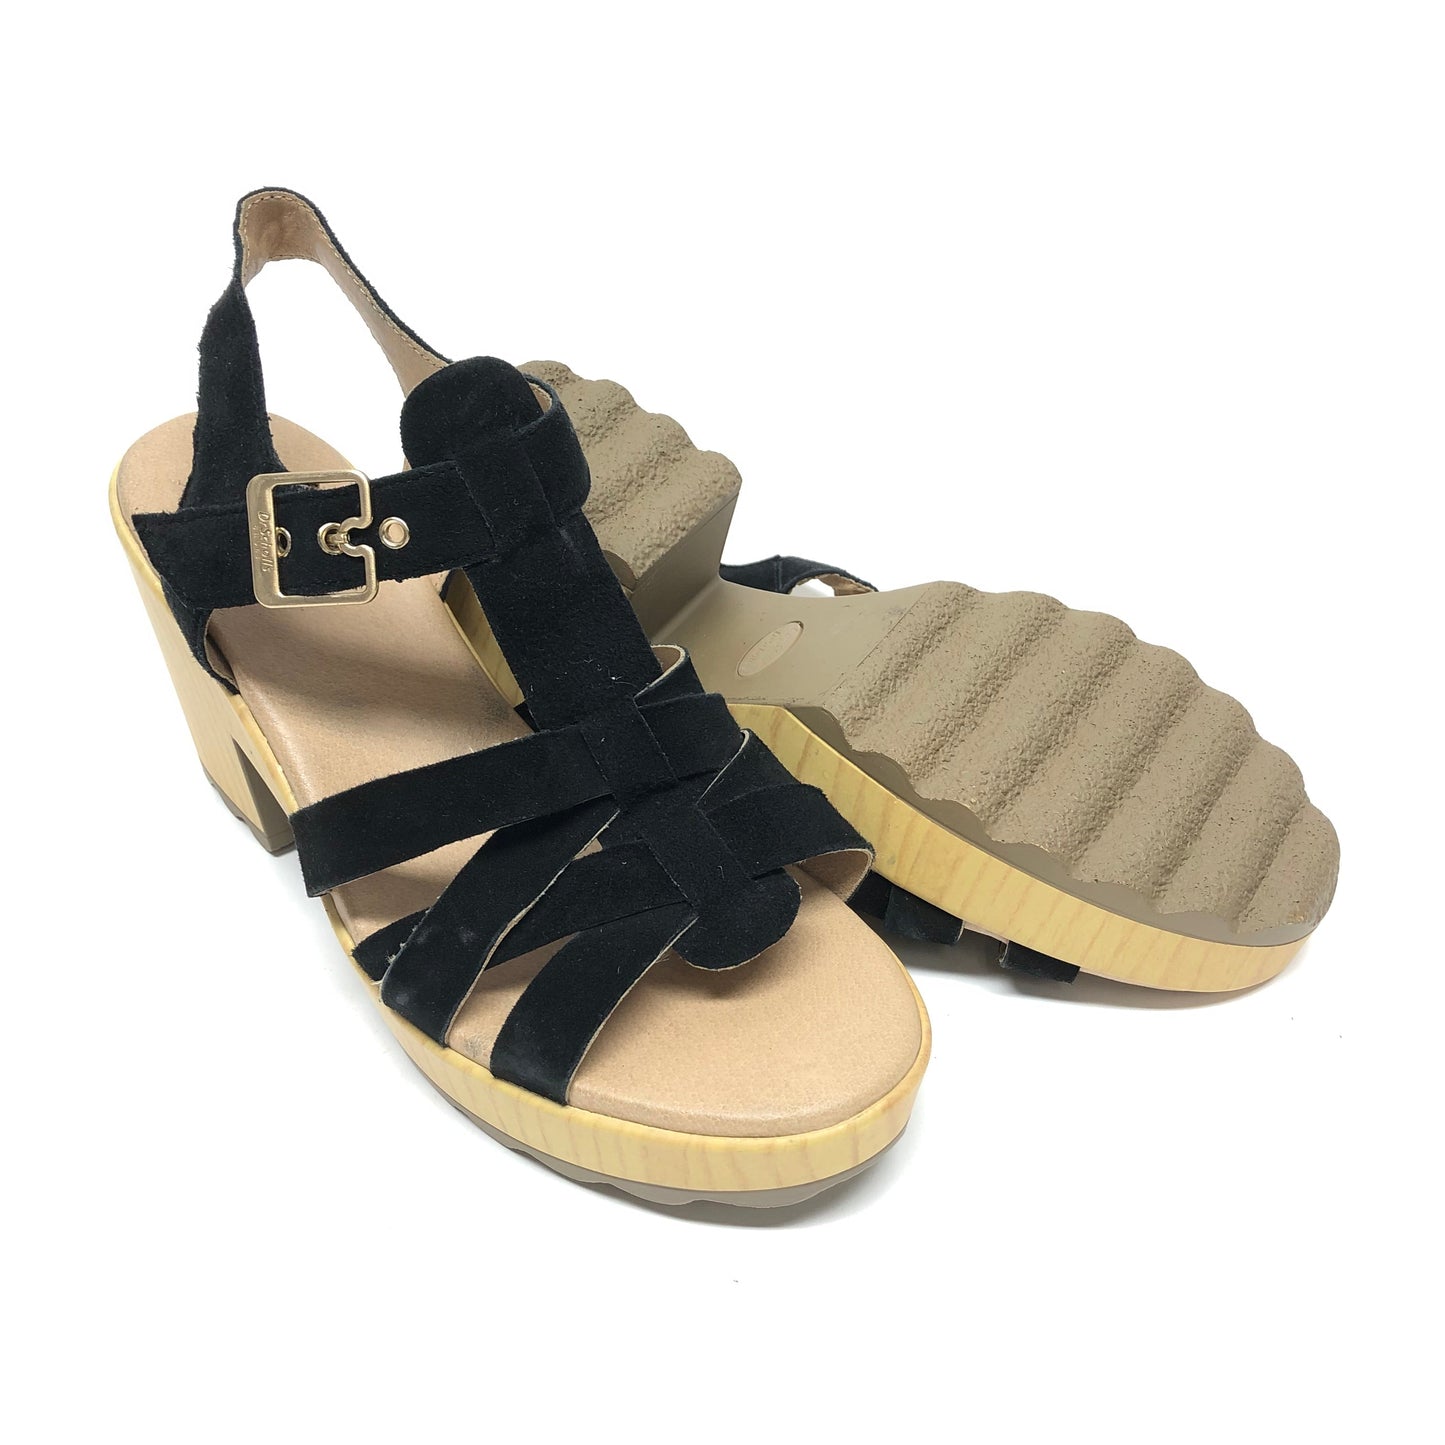 Sandals Heels Block By Dr Scholls  Size: 8.5